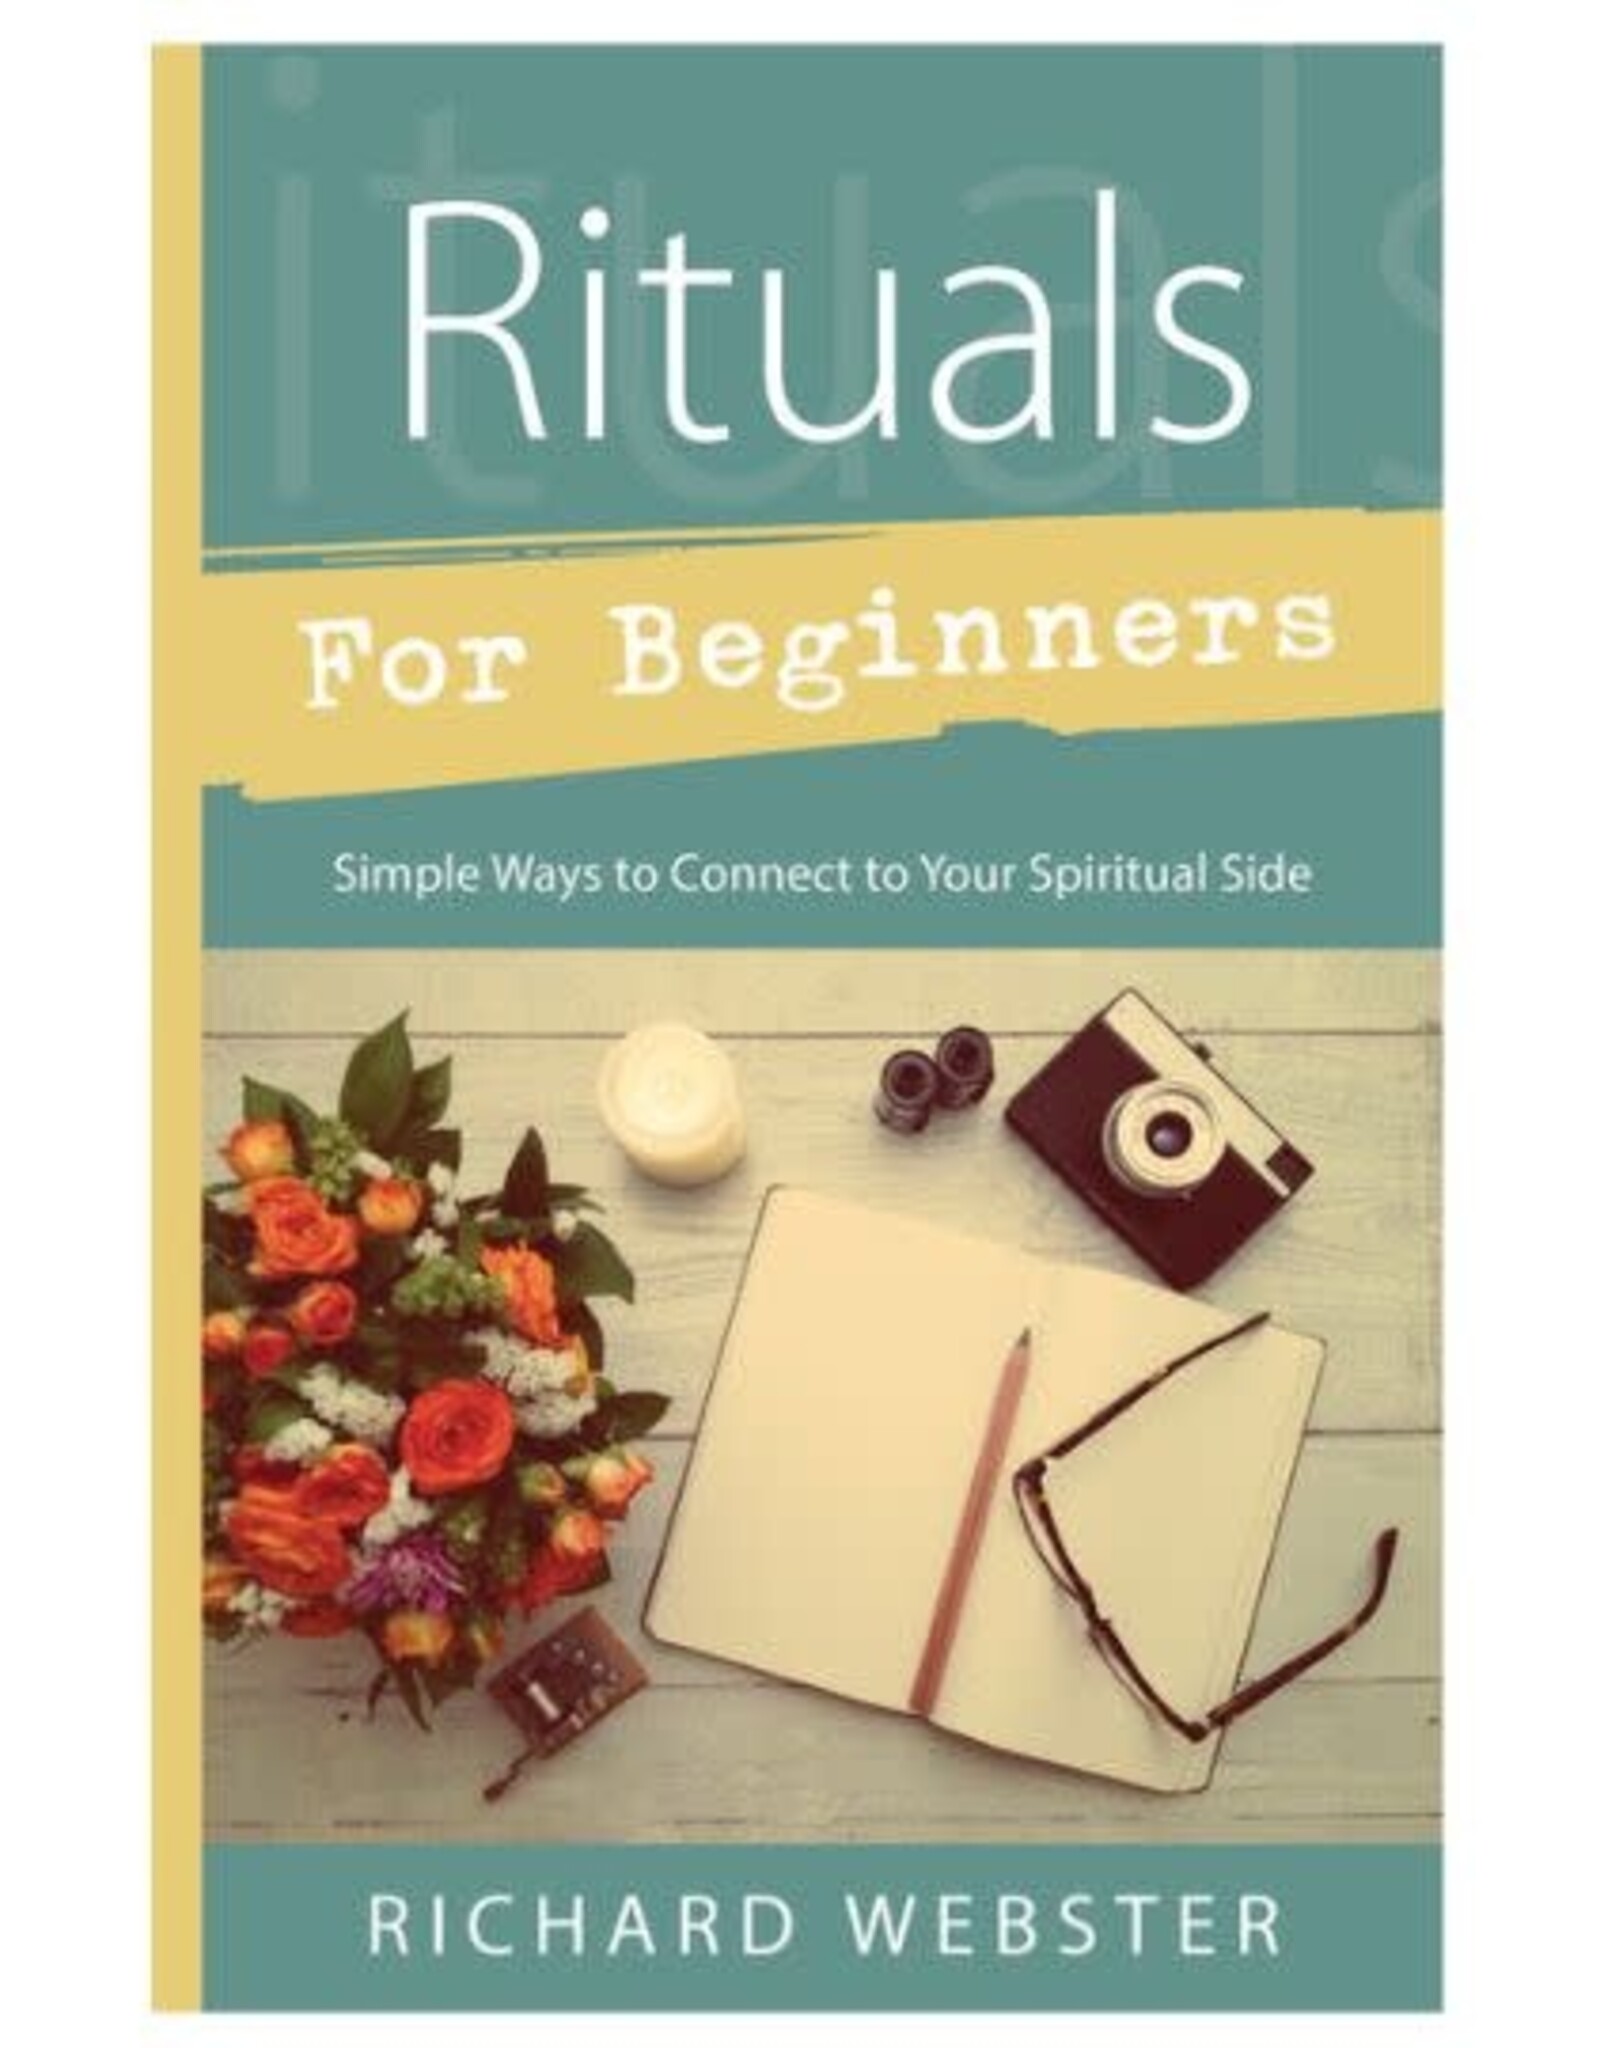 Richard Webster Rituals for Beginners by Richard Webster